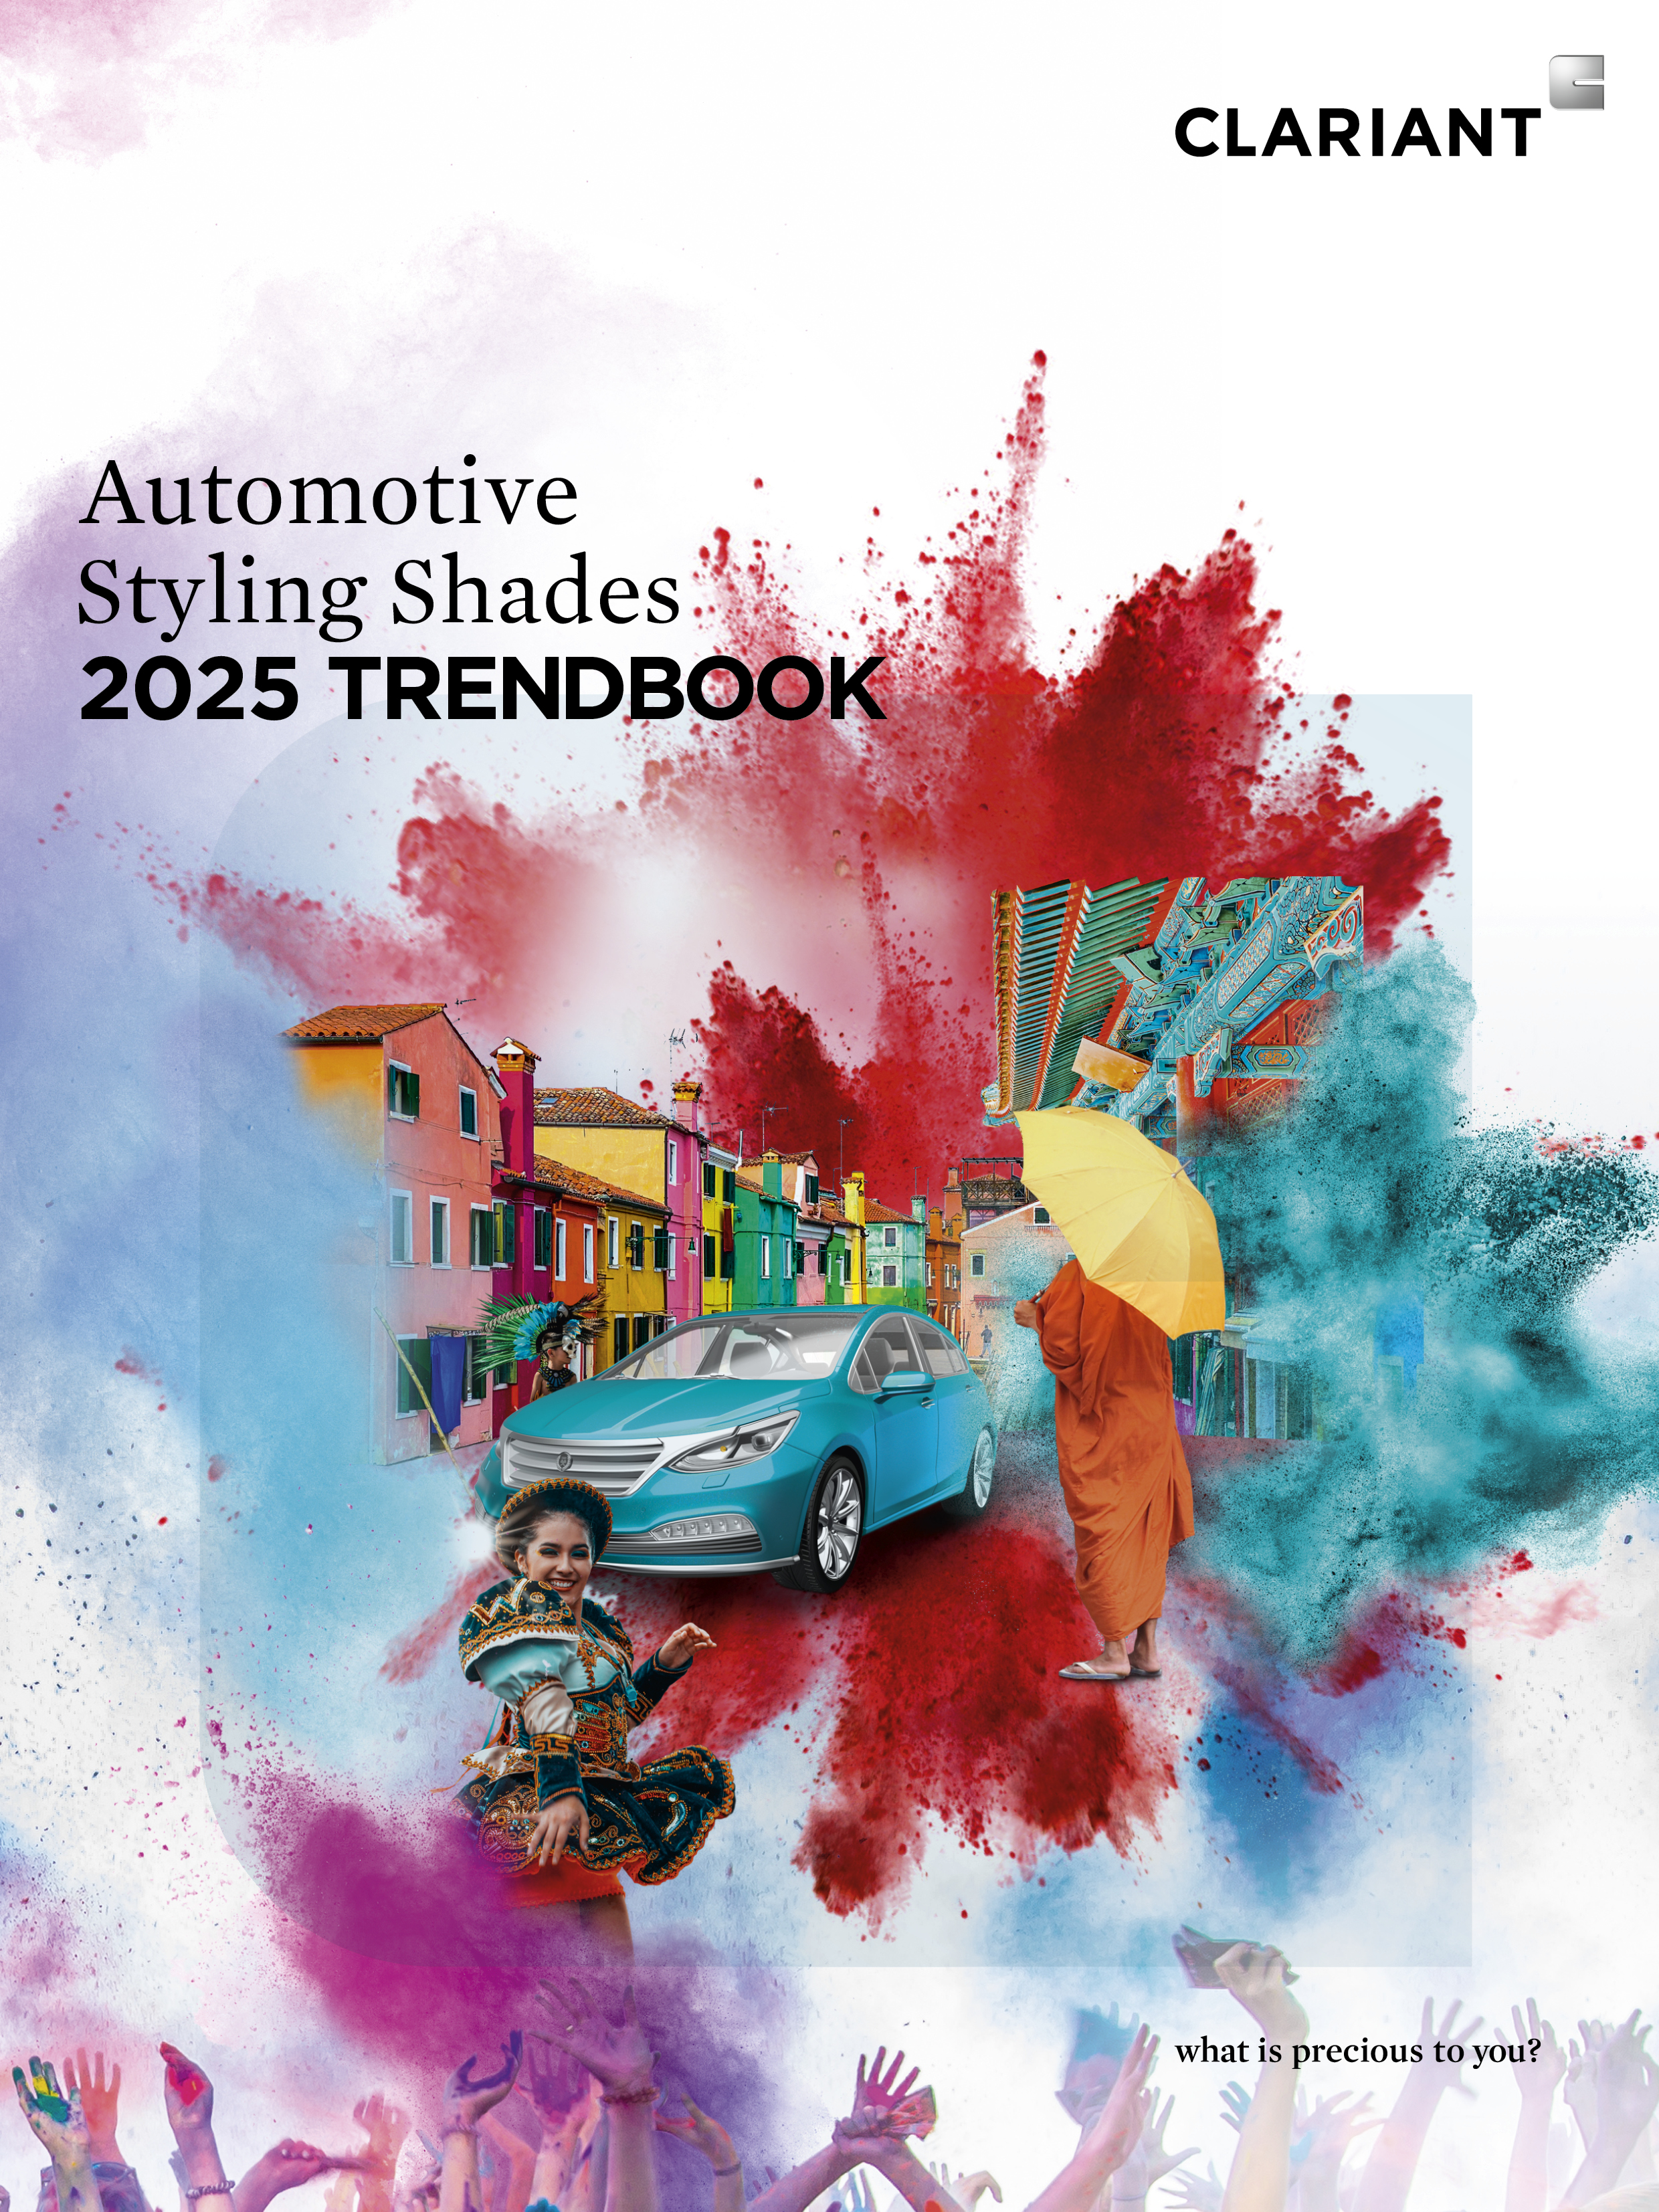 Capa do novo Automotive Styling Shades 2025 Trendbook da Clariant. 
(Fotografía: Clariant)